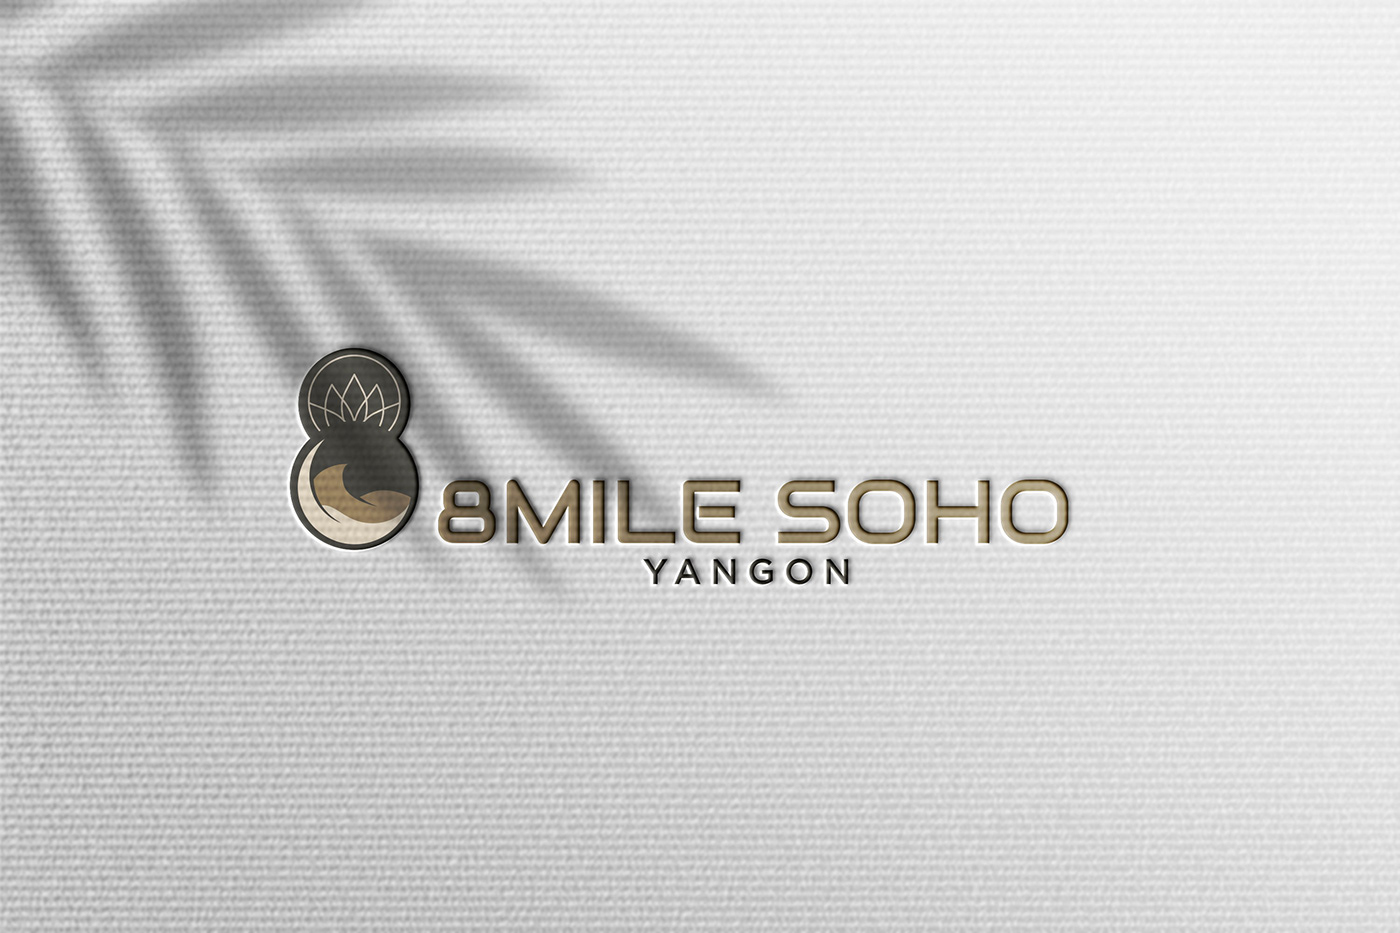 8mile branding  logo myanmar soho yangon